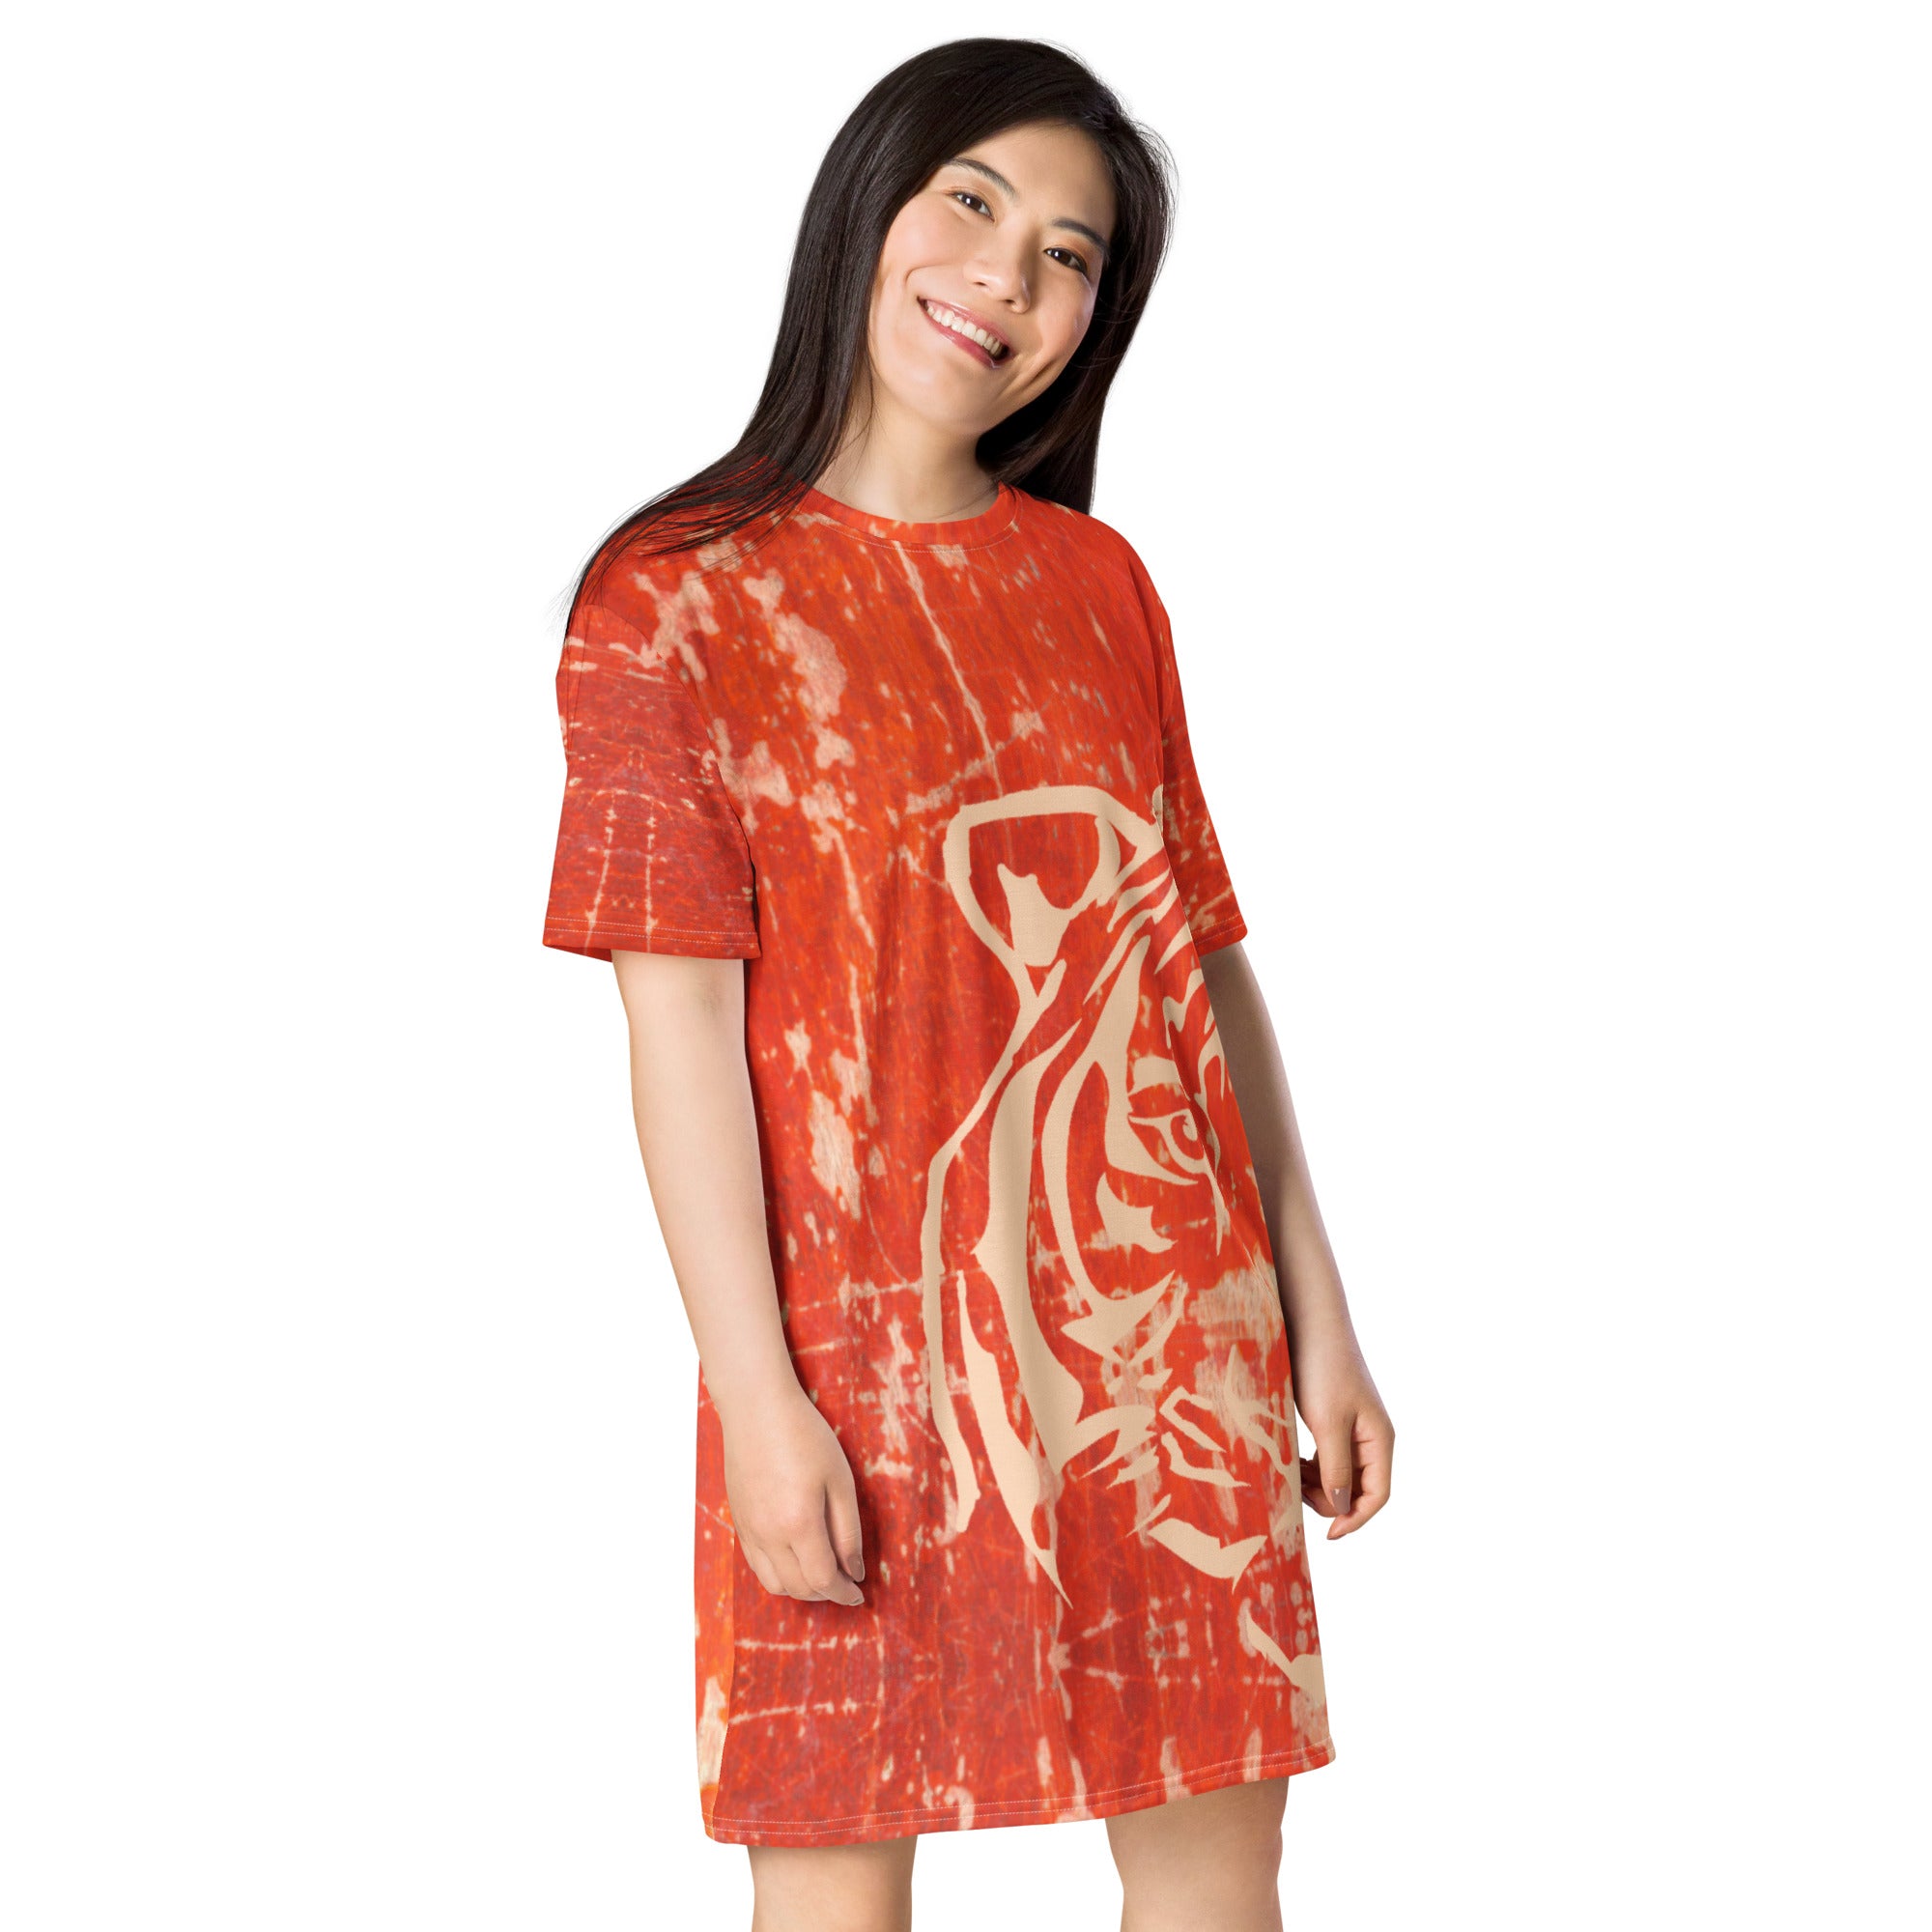 Distressed Orange Cream Tiger T-shirt dress